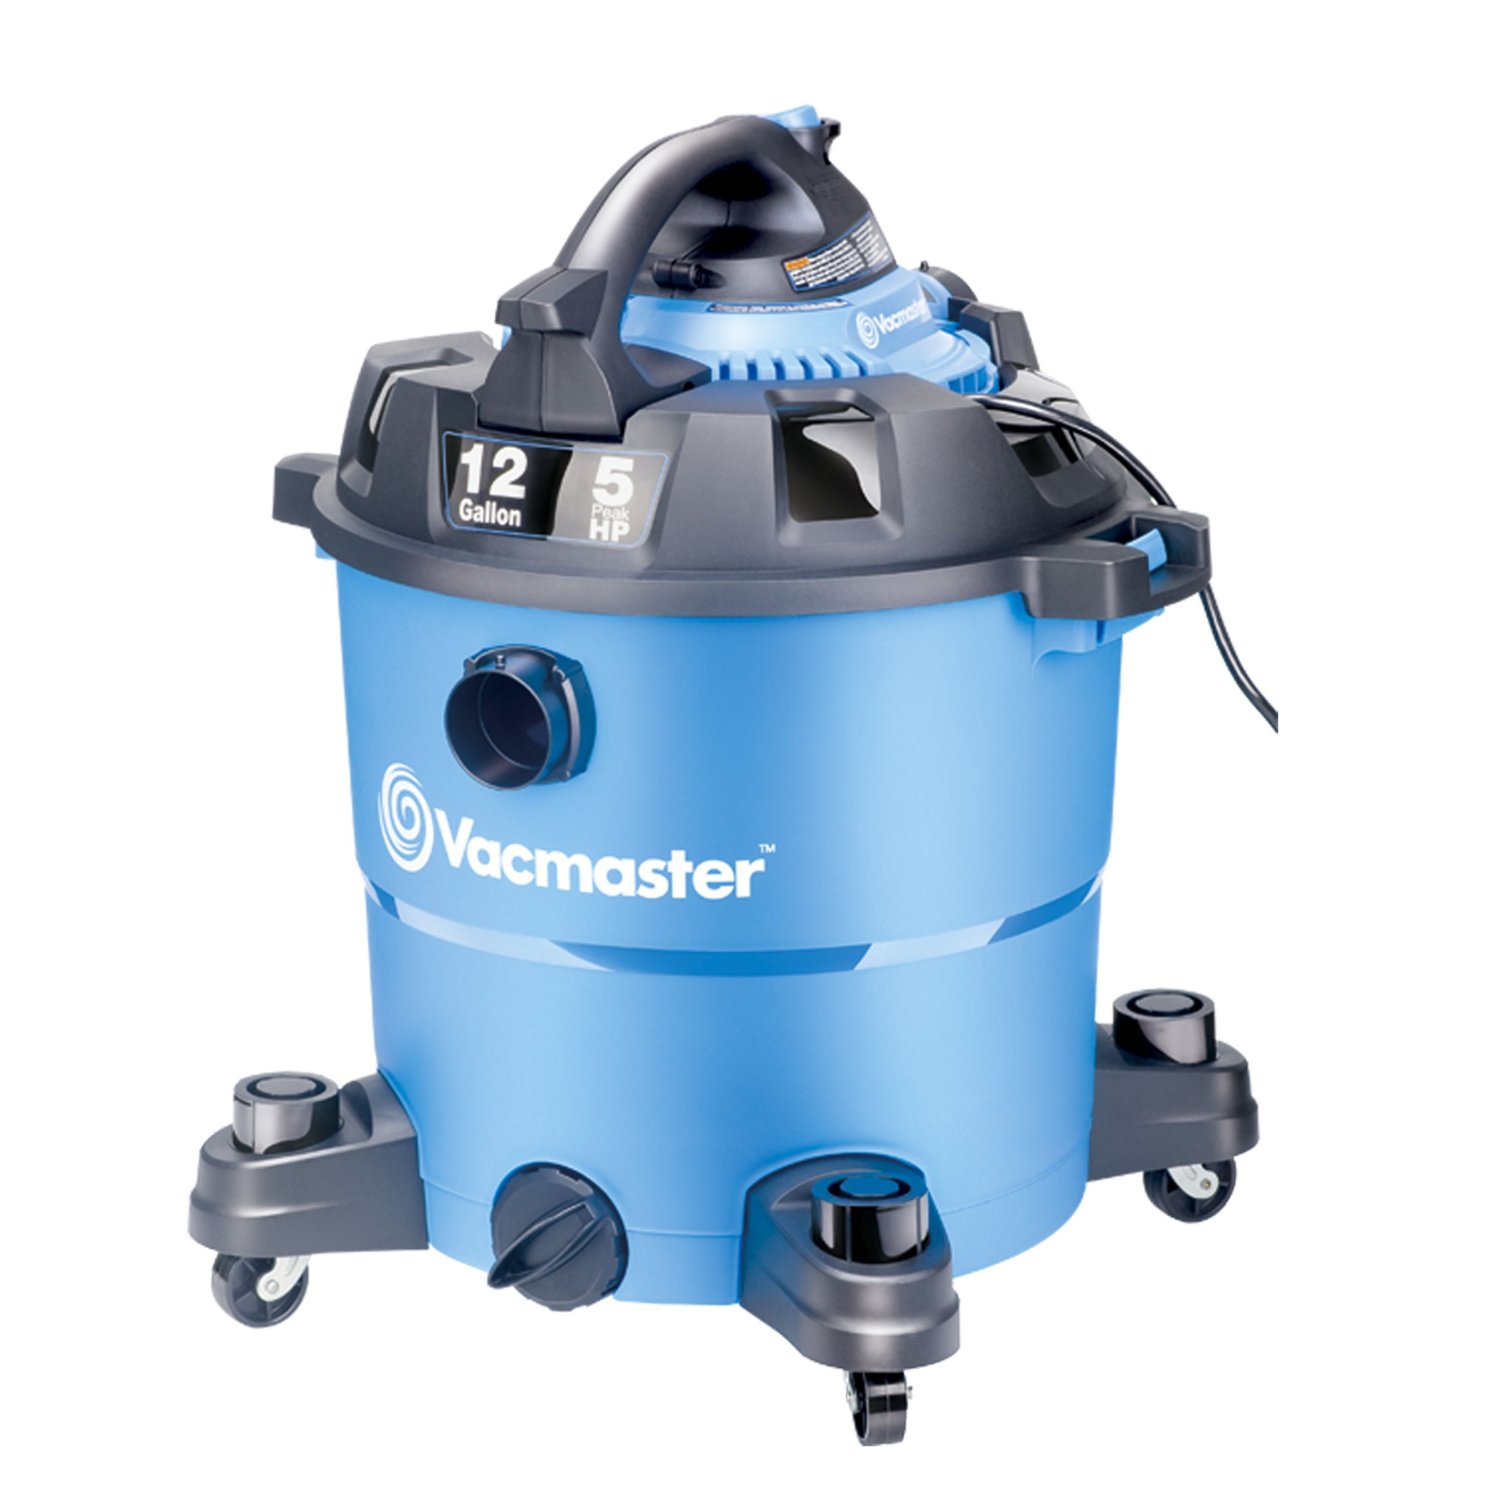 Vacmaster VBV1210 Detachable Blower Wet-Dry Vacuum